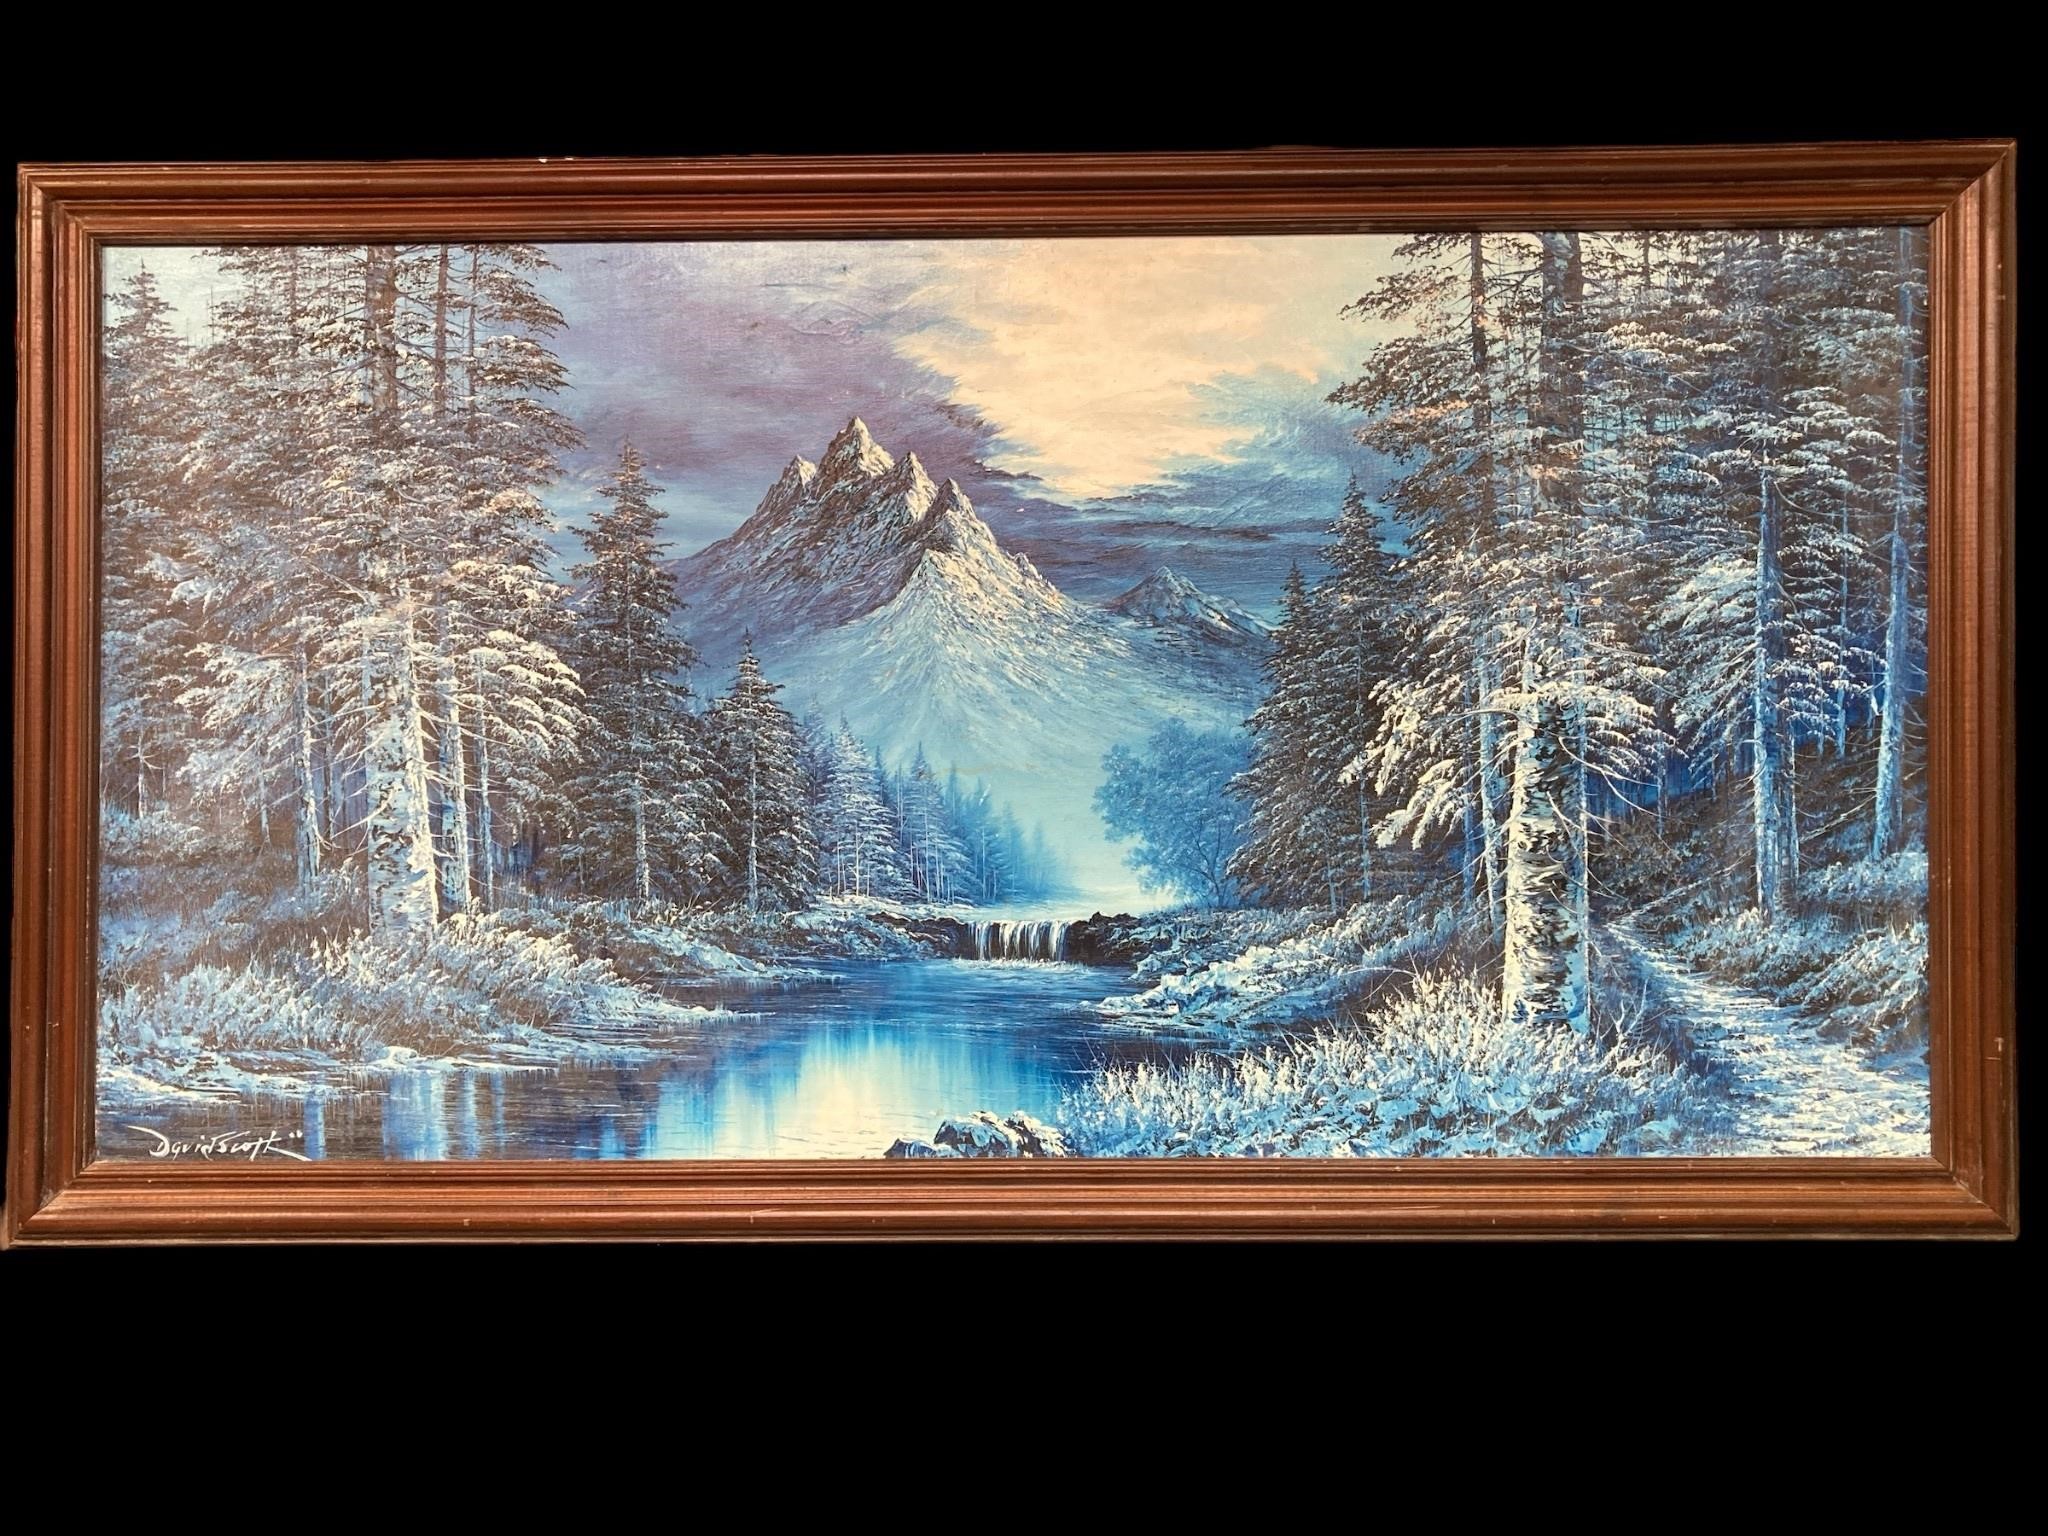 Framed Signed 30x60” David Scott Mountain Painting